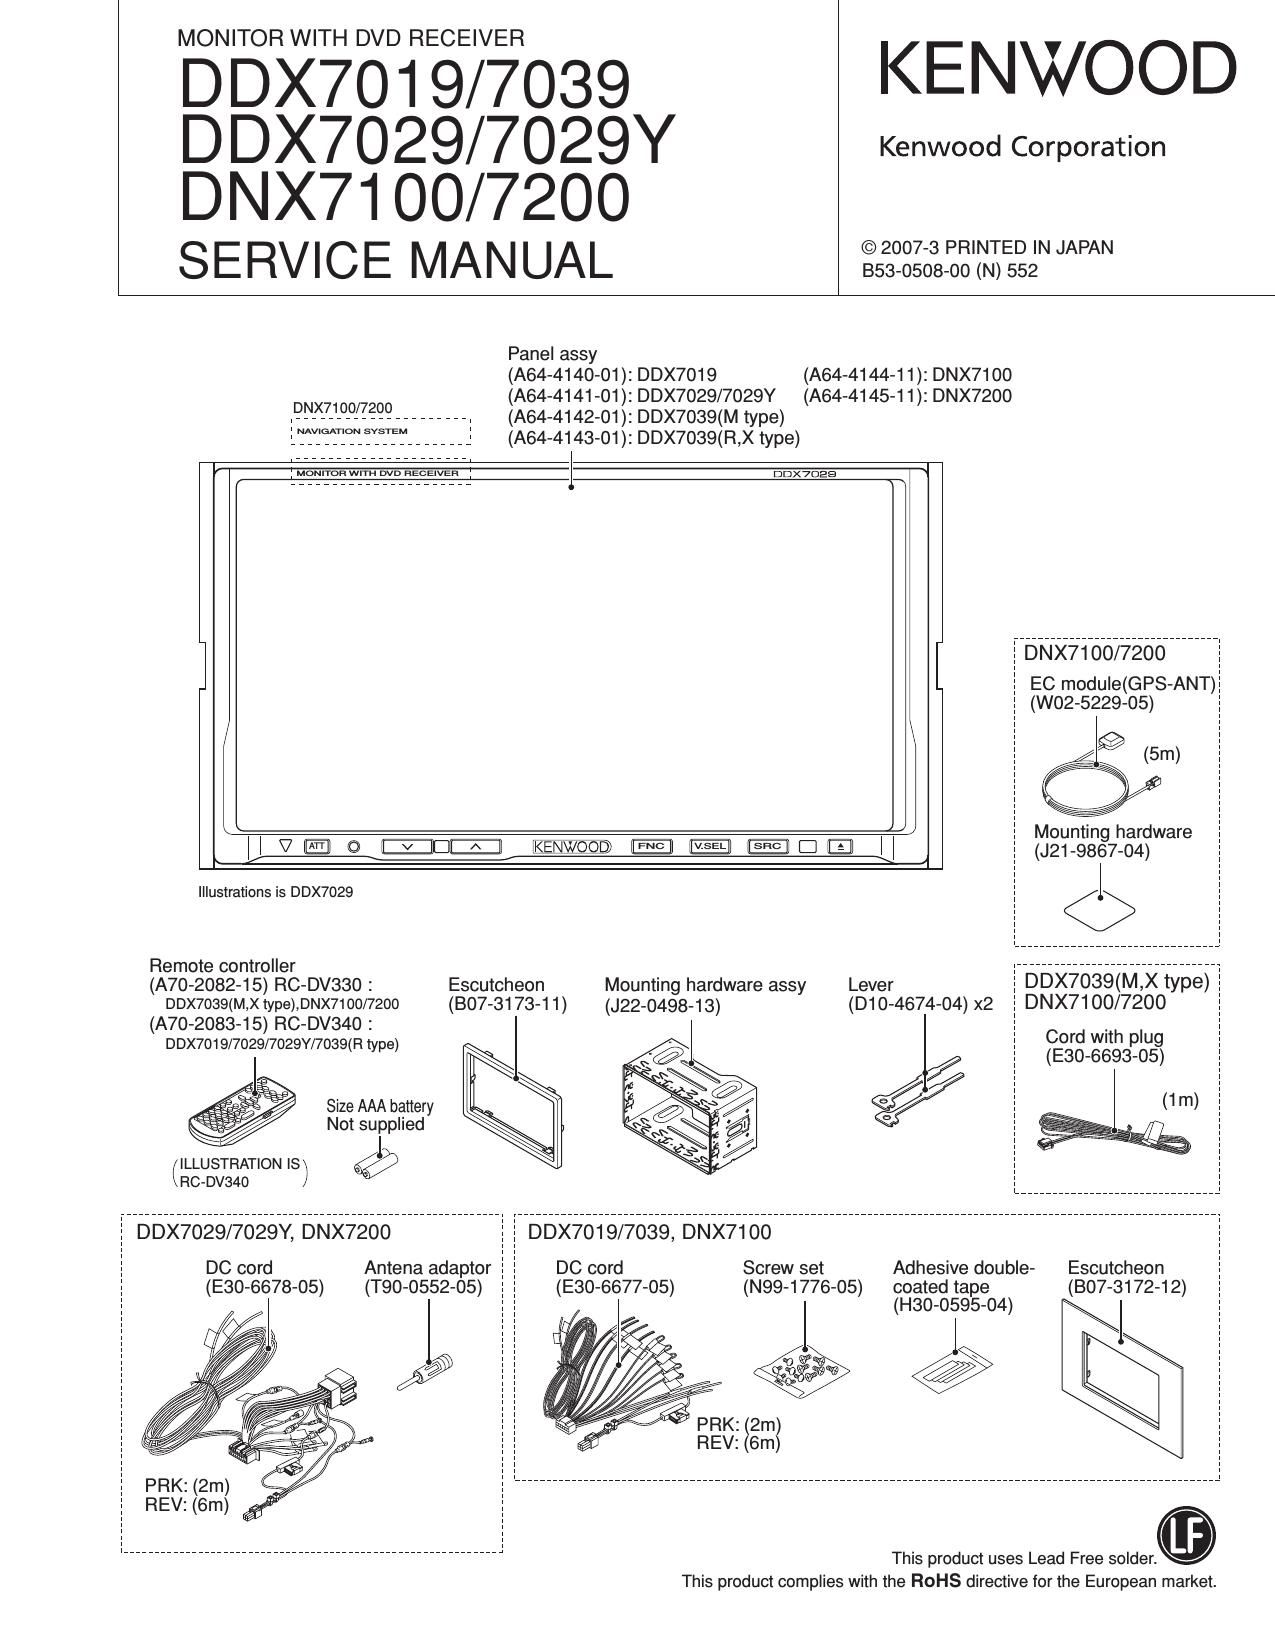 Kenwood DDX 7019 HU Service Manual